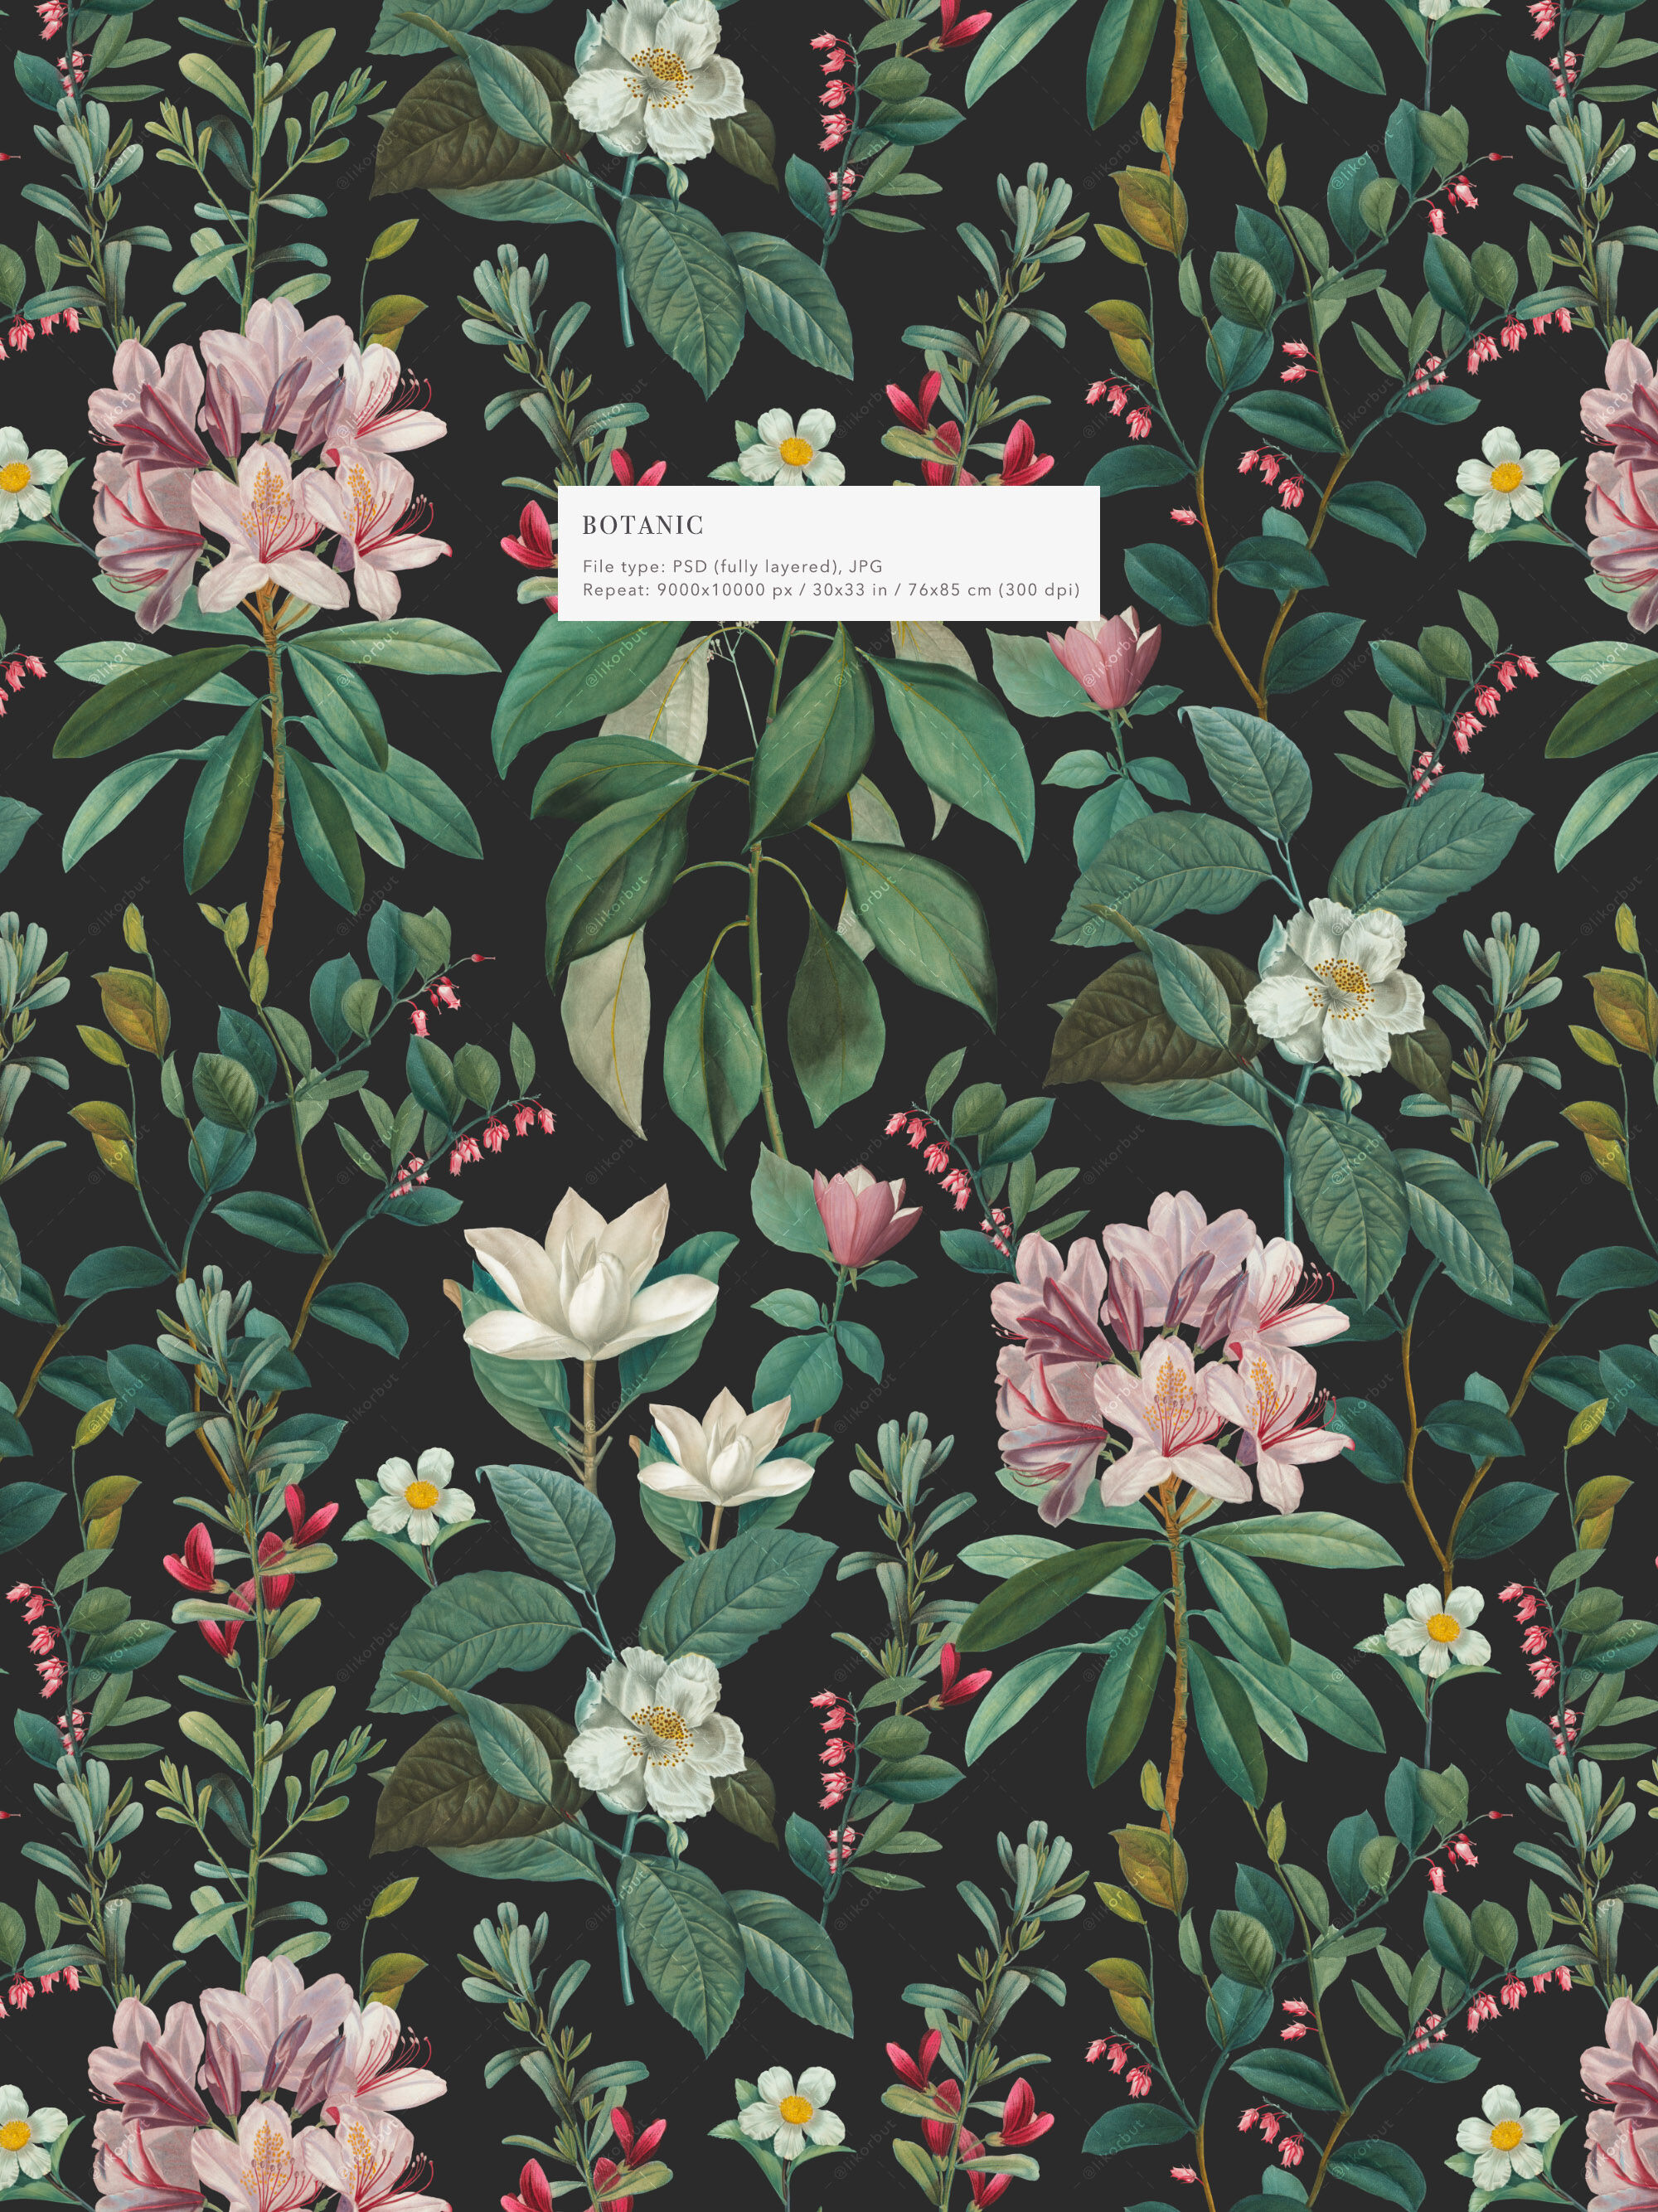 Botanical Elegant English Floral Pattern / PSD / Fully Editable By likorbut  | TheHungryJPEG